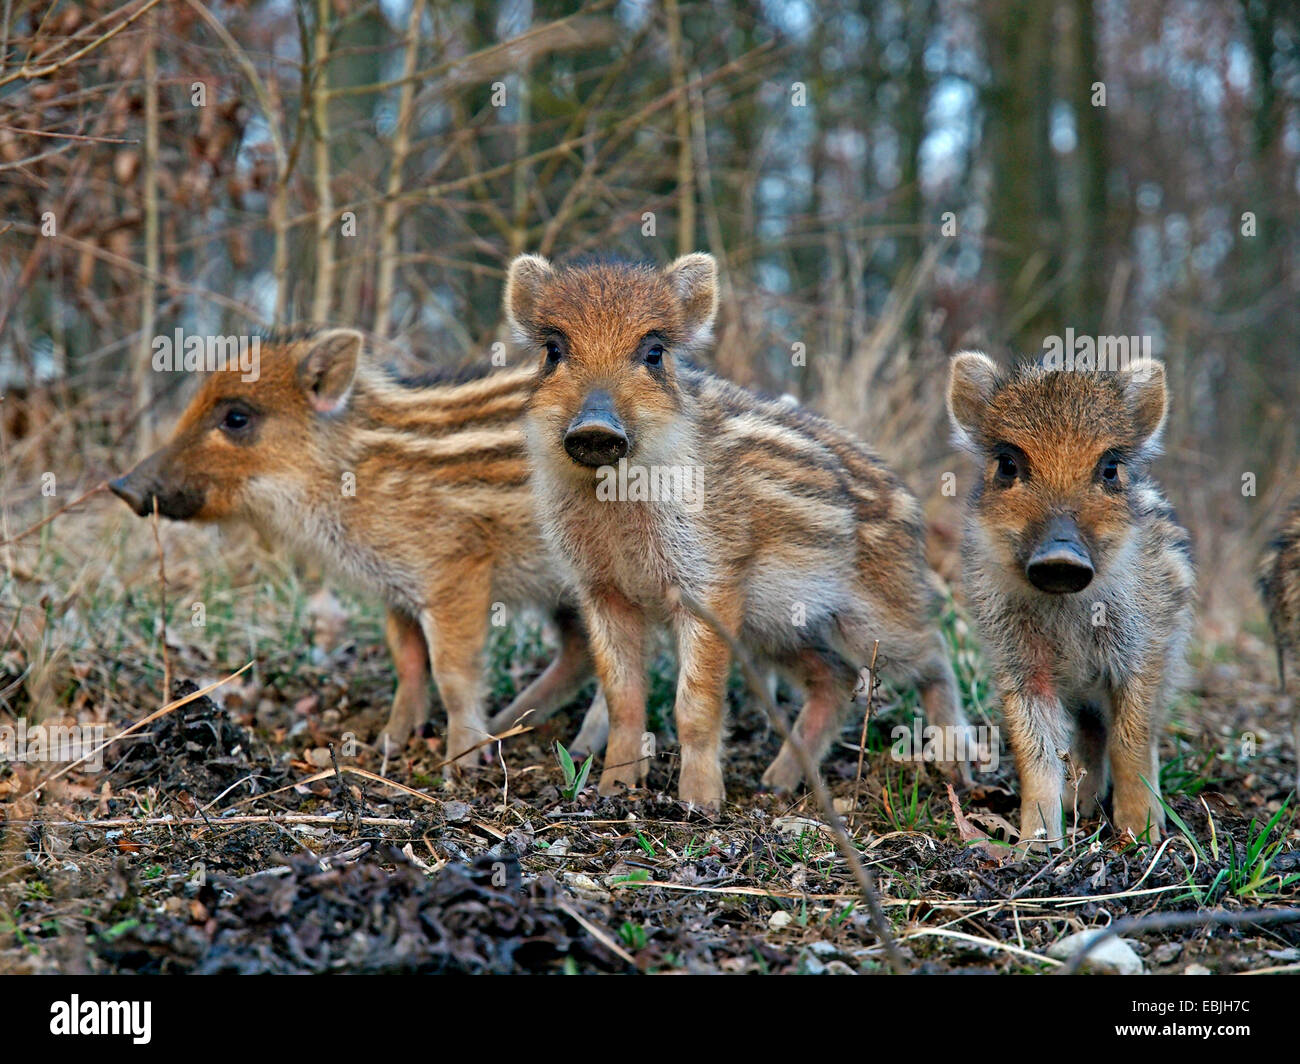 wild boar, pig, wild boar (Sus scrofa), three shoats standing in a forest, Germany, Baden-Wuerttemberg Stock Photo